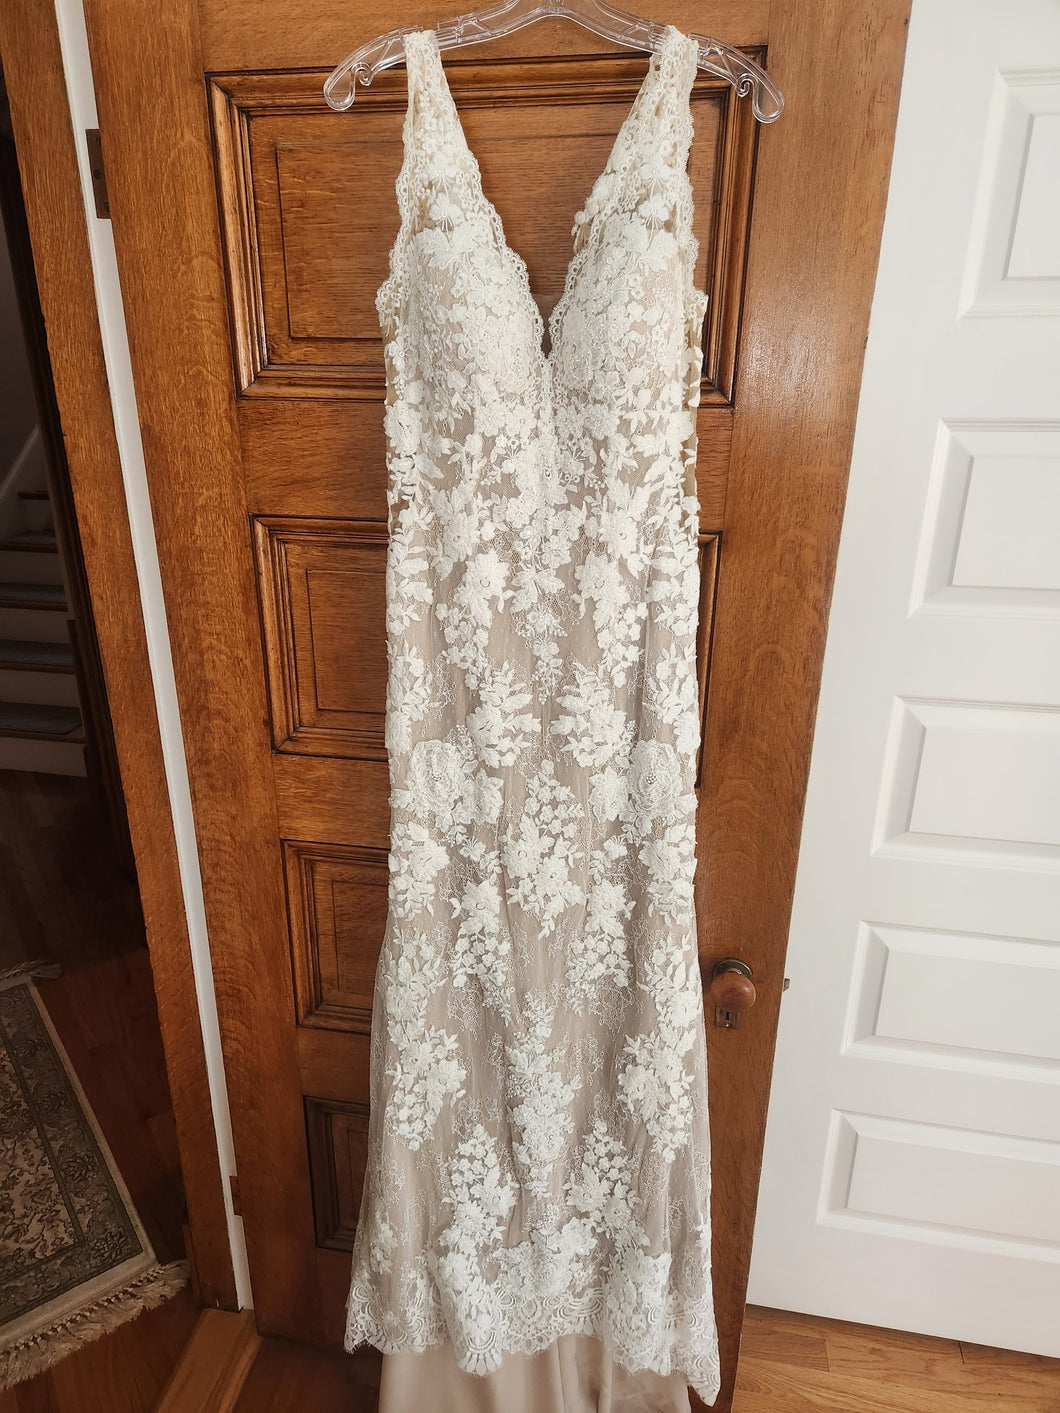 Stella York '6933' wedding dress size-10 NEW